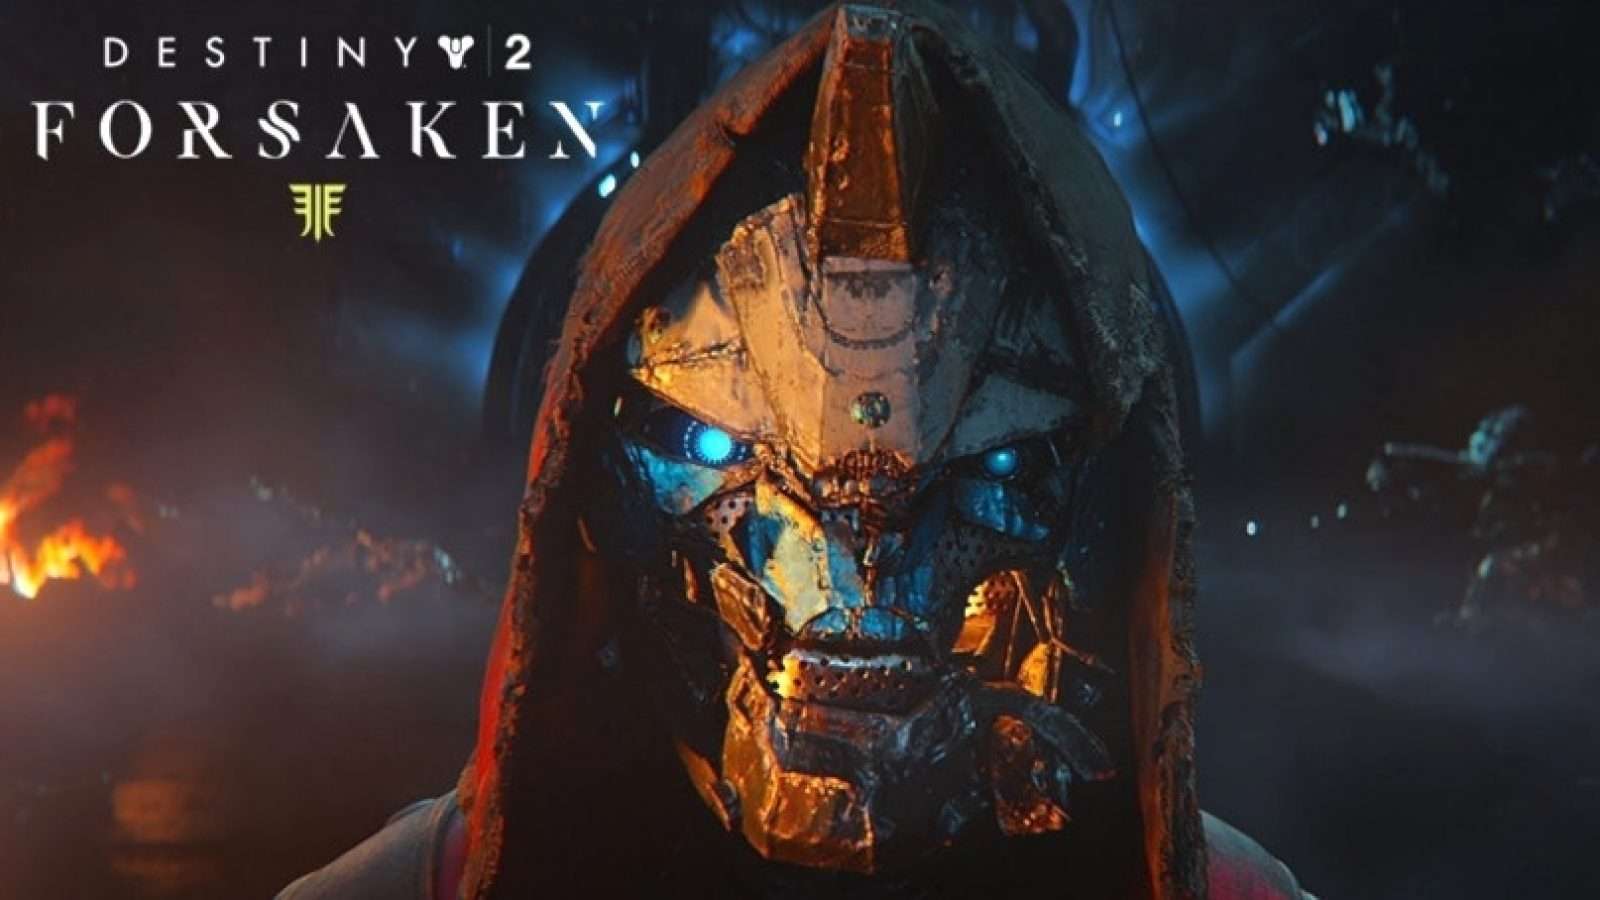 Destiny 2 Forsaken screenshot showing Cayde-6's face